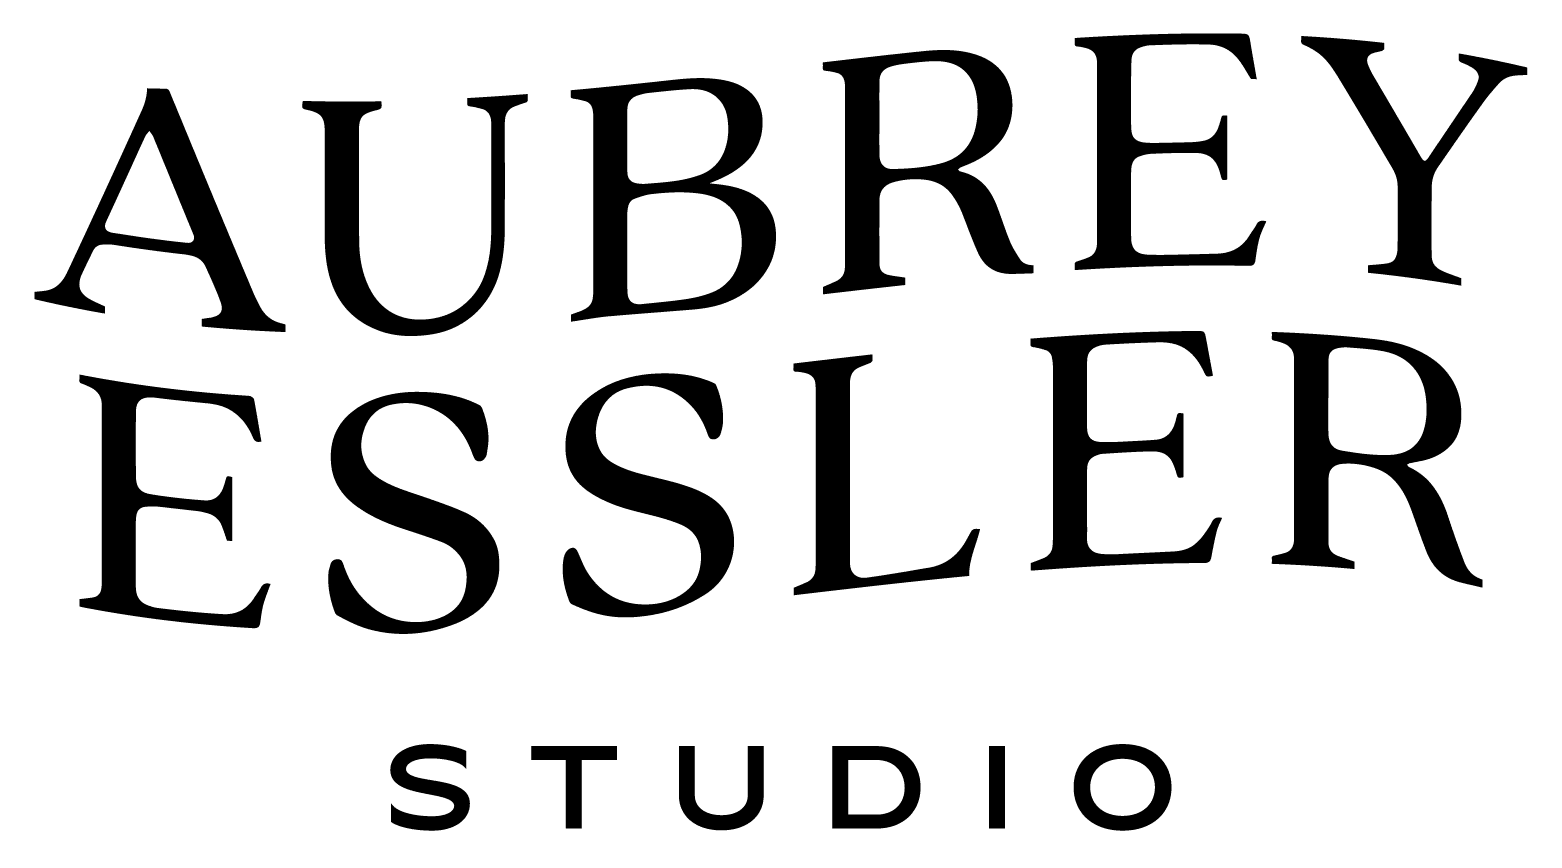 aubrey essler studio graphic design is a service sponsor